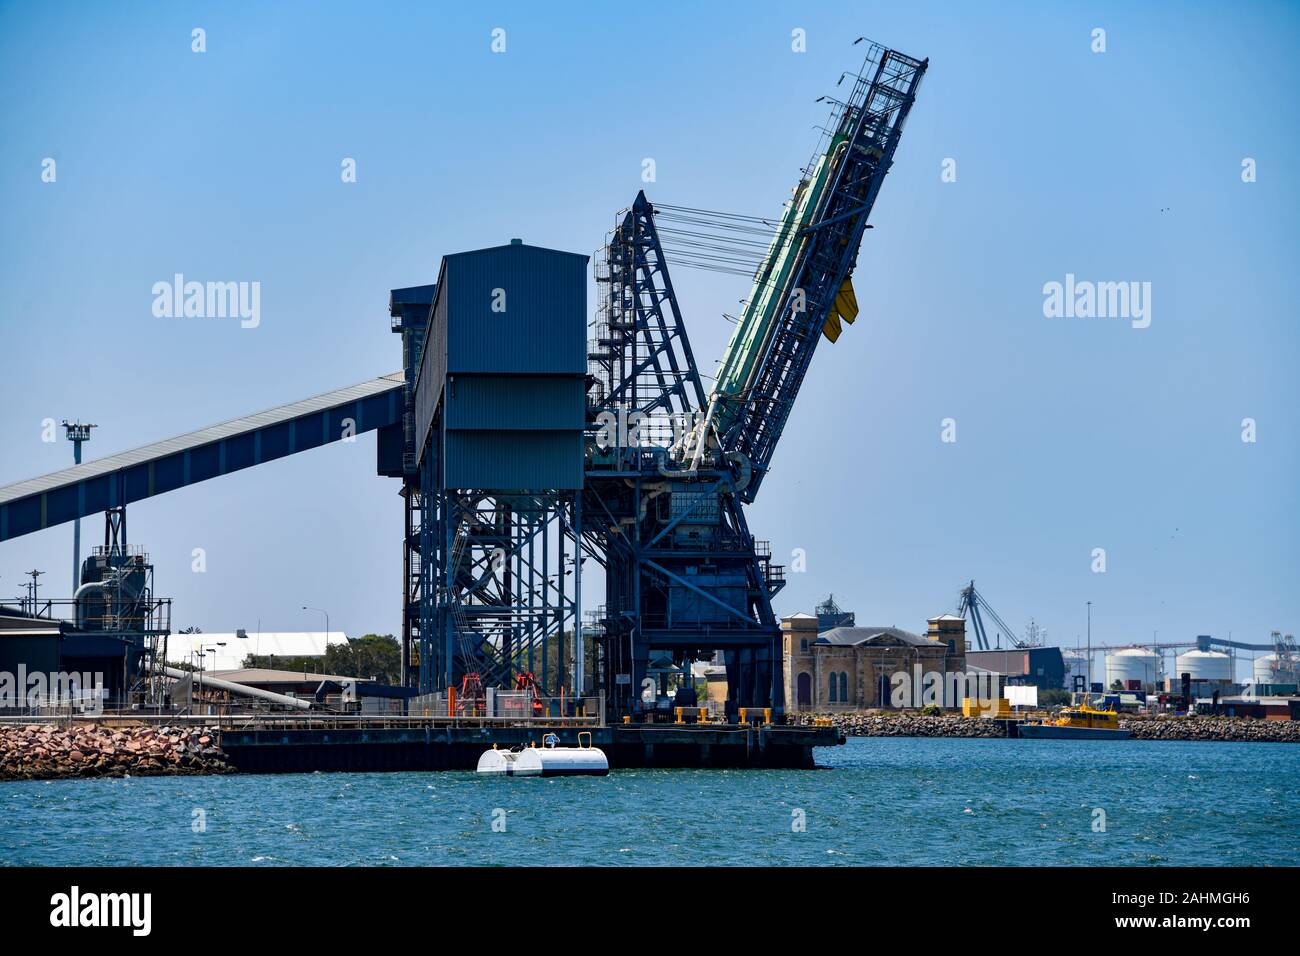 Grain Silos and Wharf Ship Loading Cranes at Port of Newcastle Stock Photo